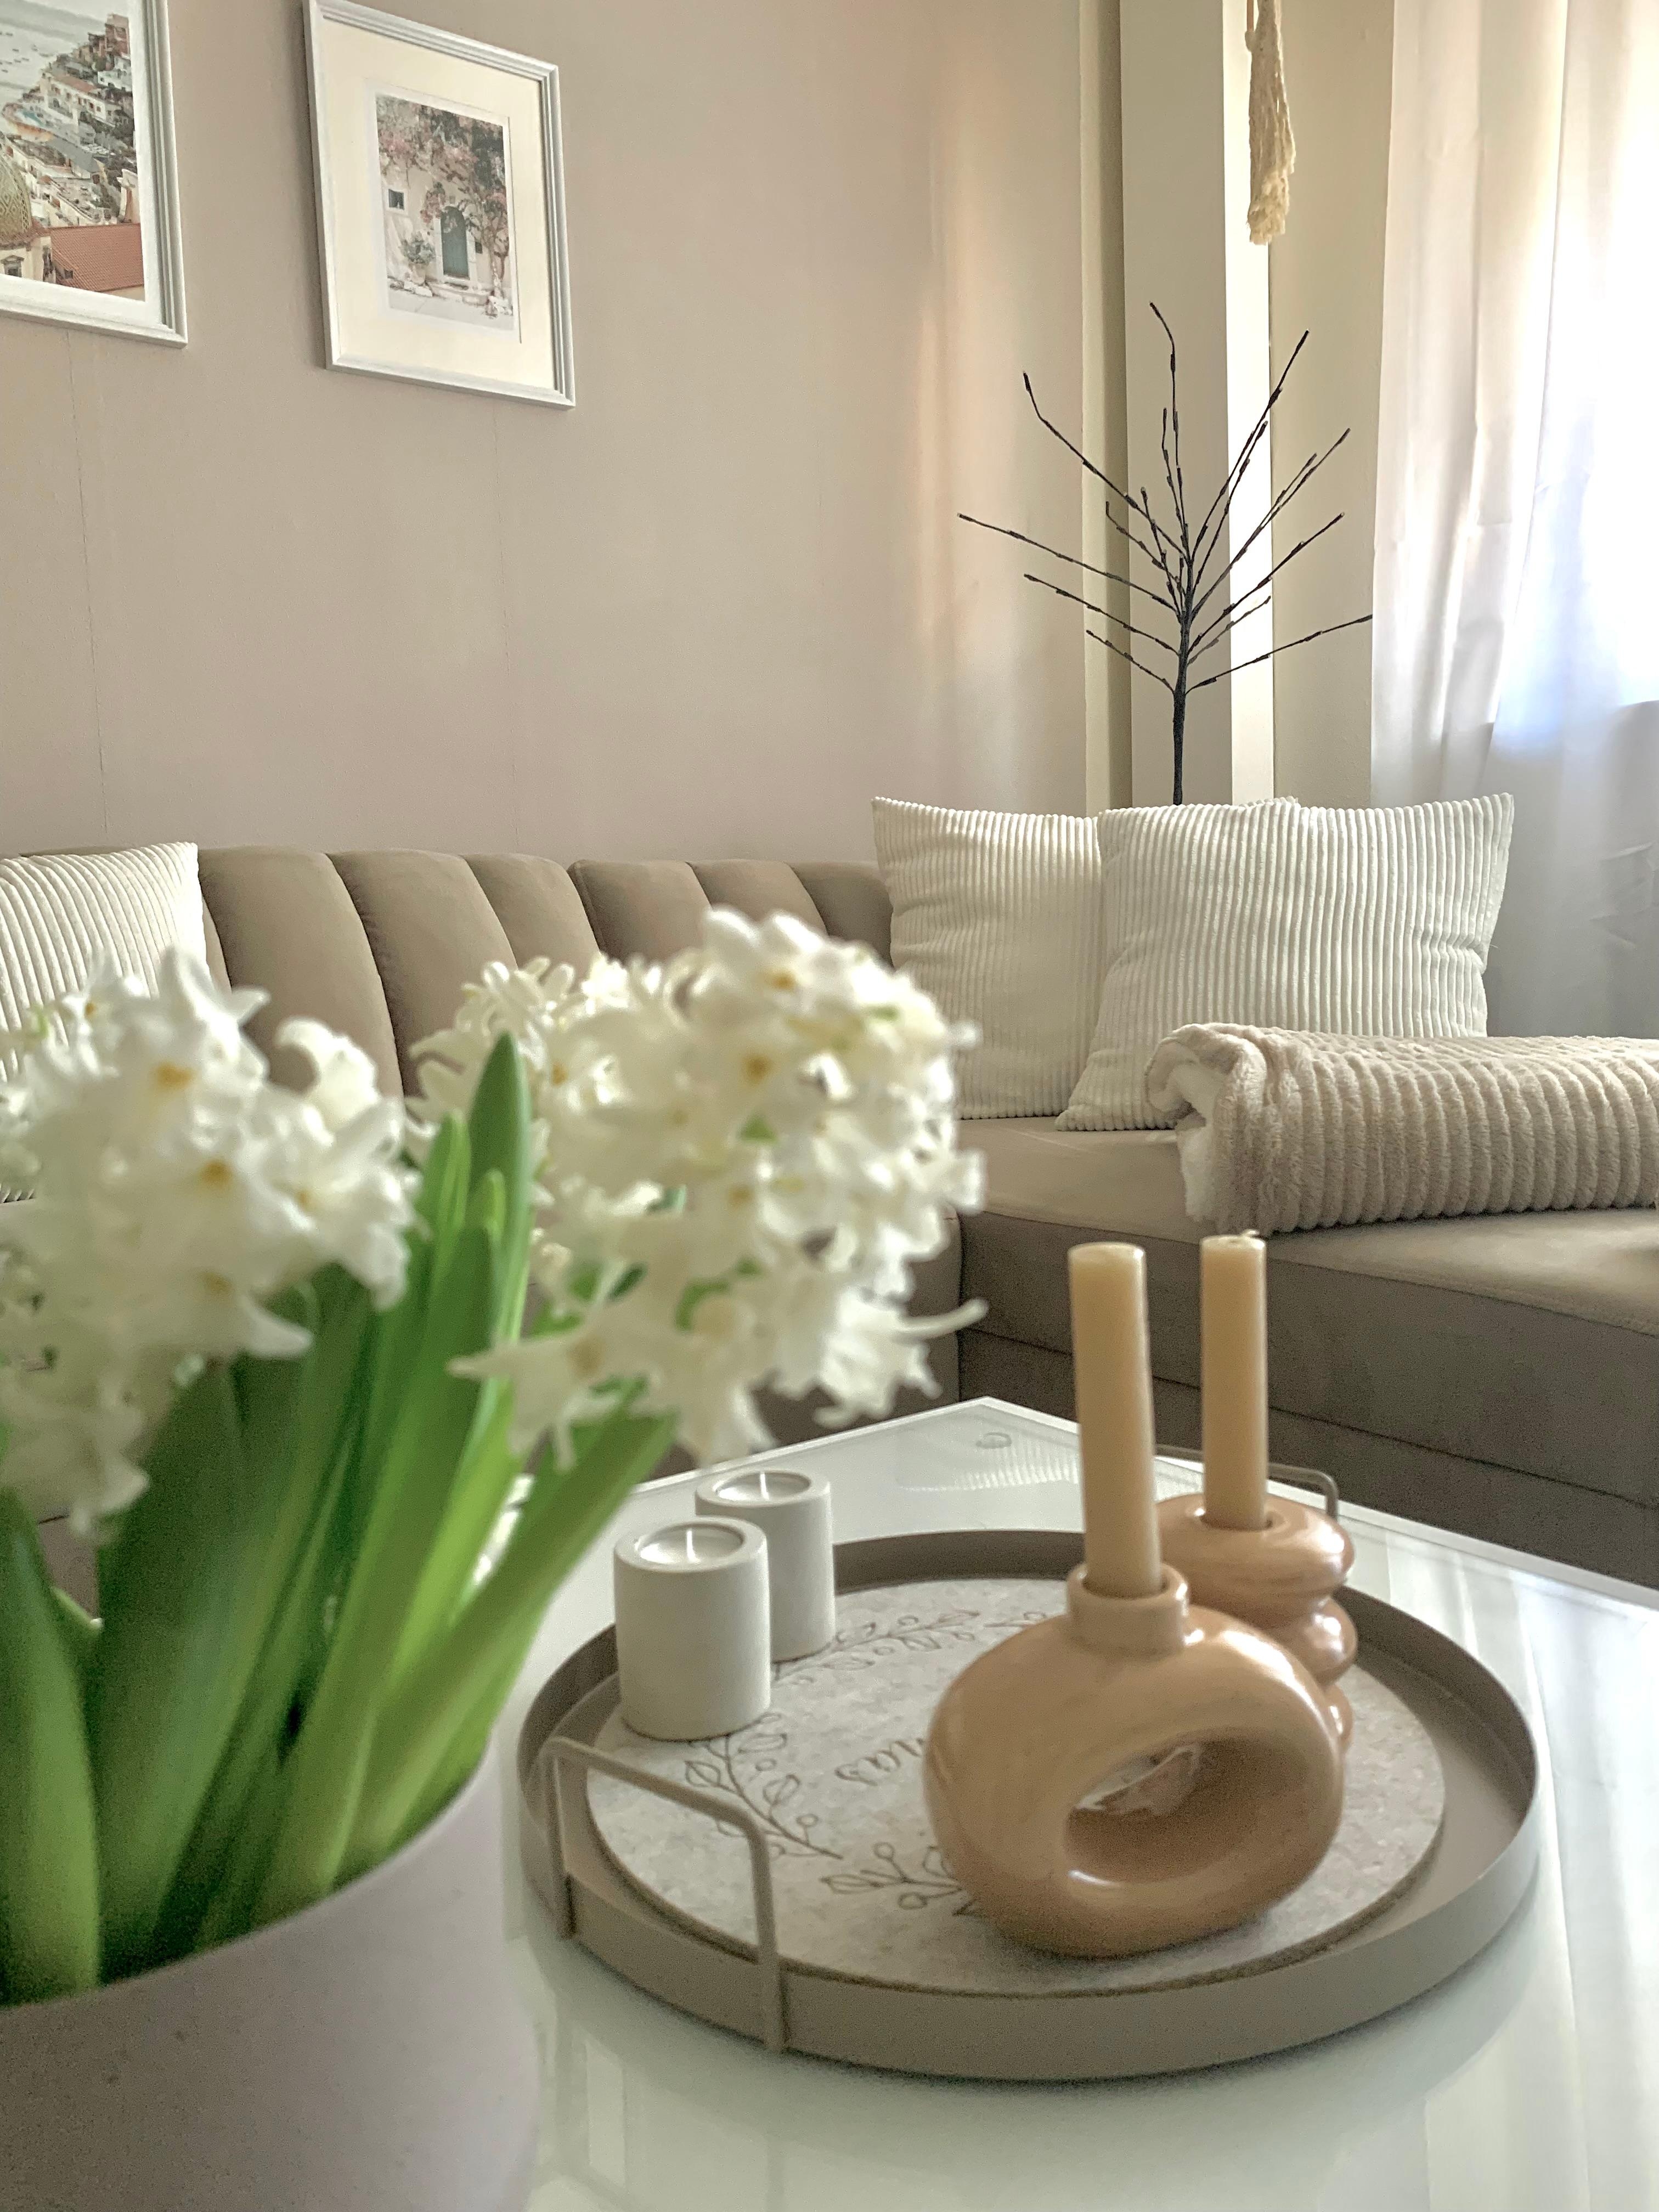 Helles wohnen 🤍🤎

#cozy #couch #flower #bild #kerzen #vase #kissen #couchtisch 